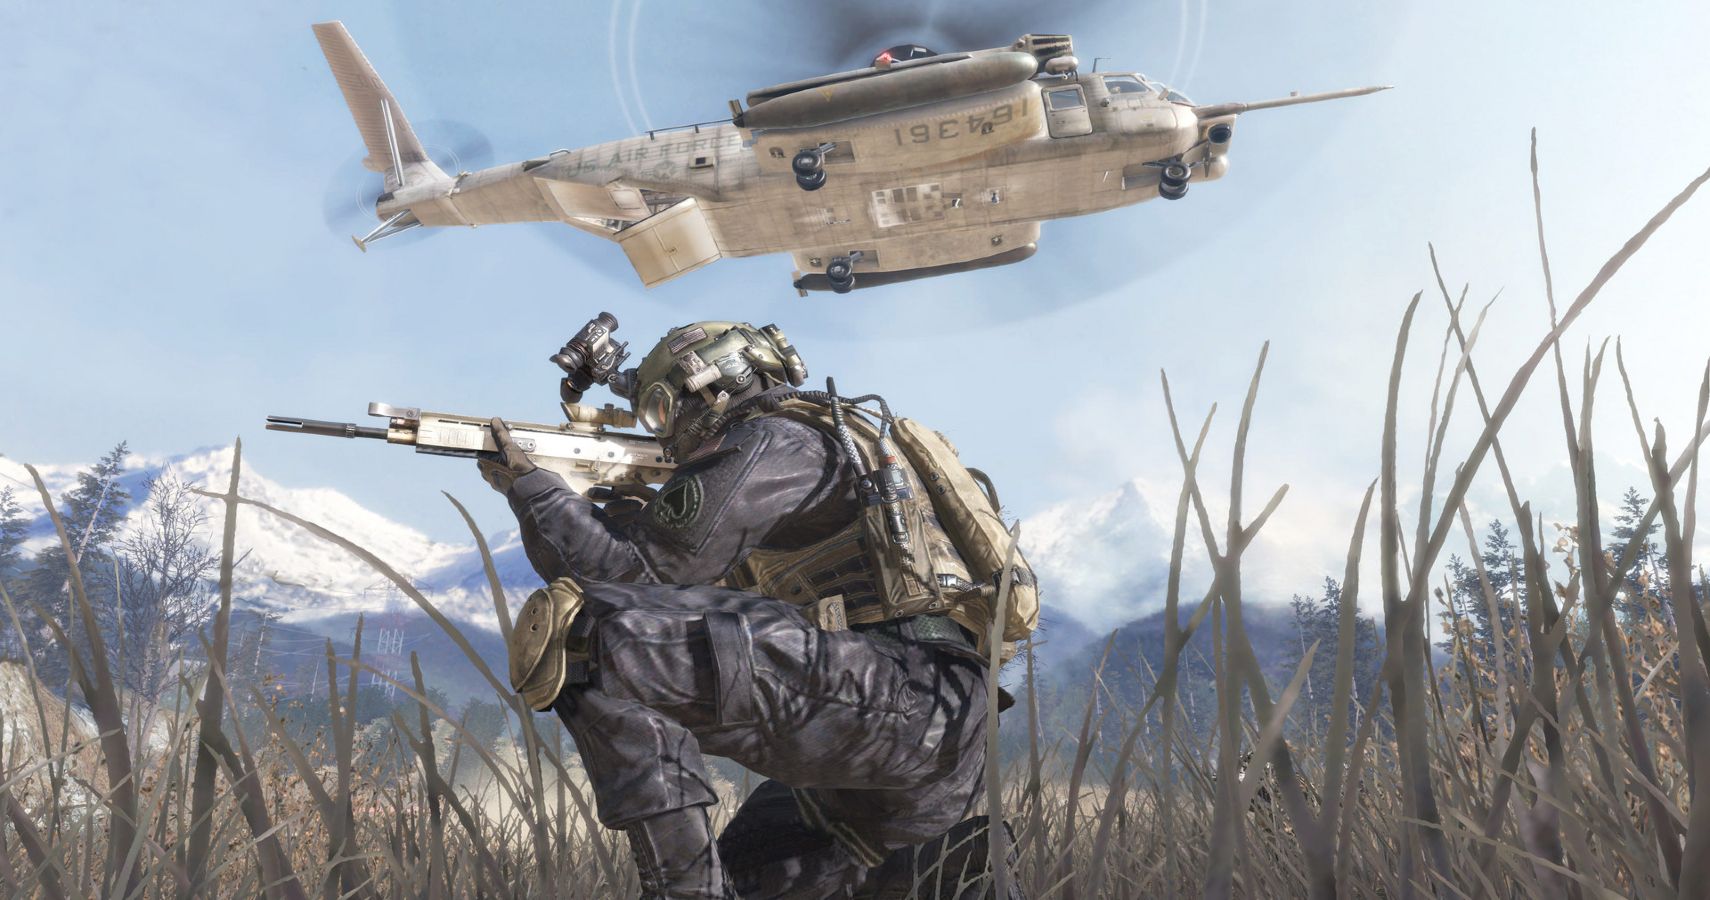 Metacritic - Call of Duty: Modern Warfare 2 Remastered is